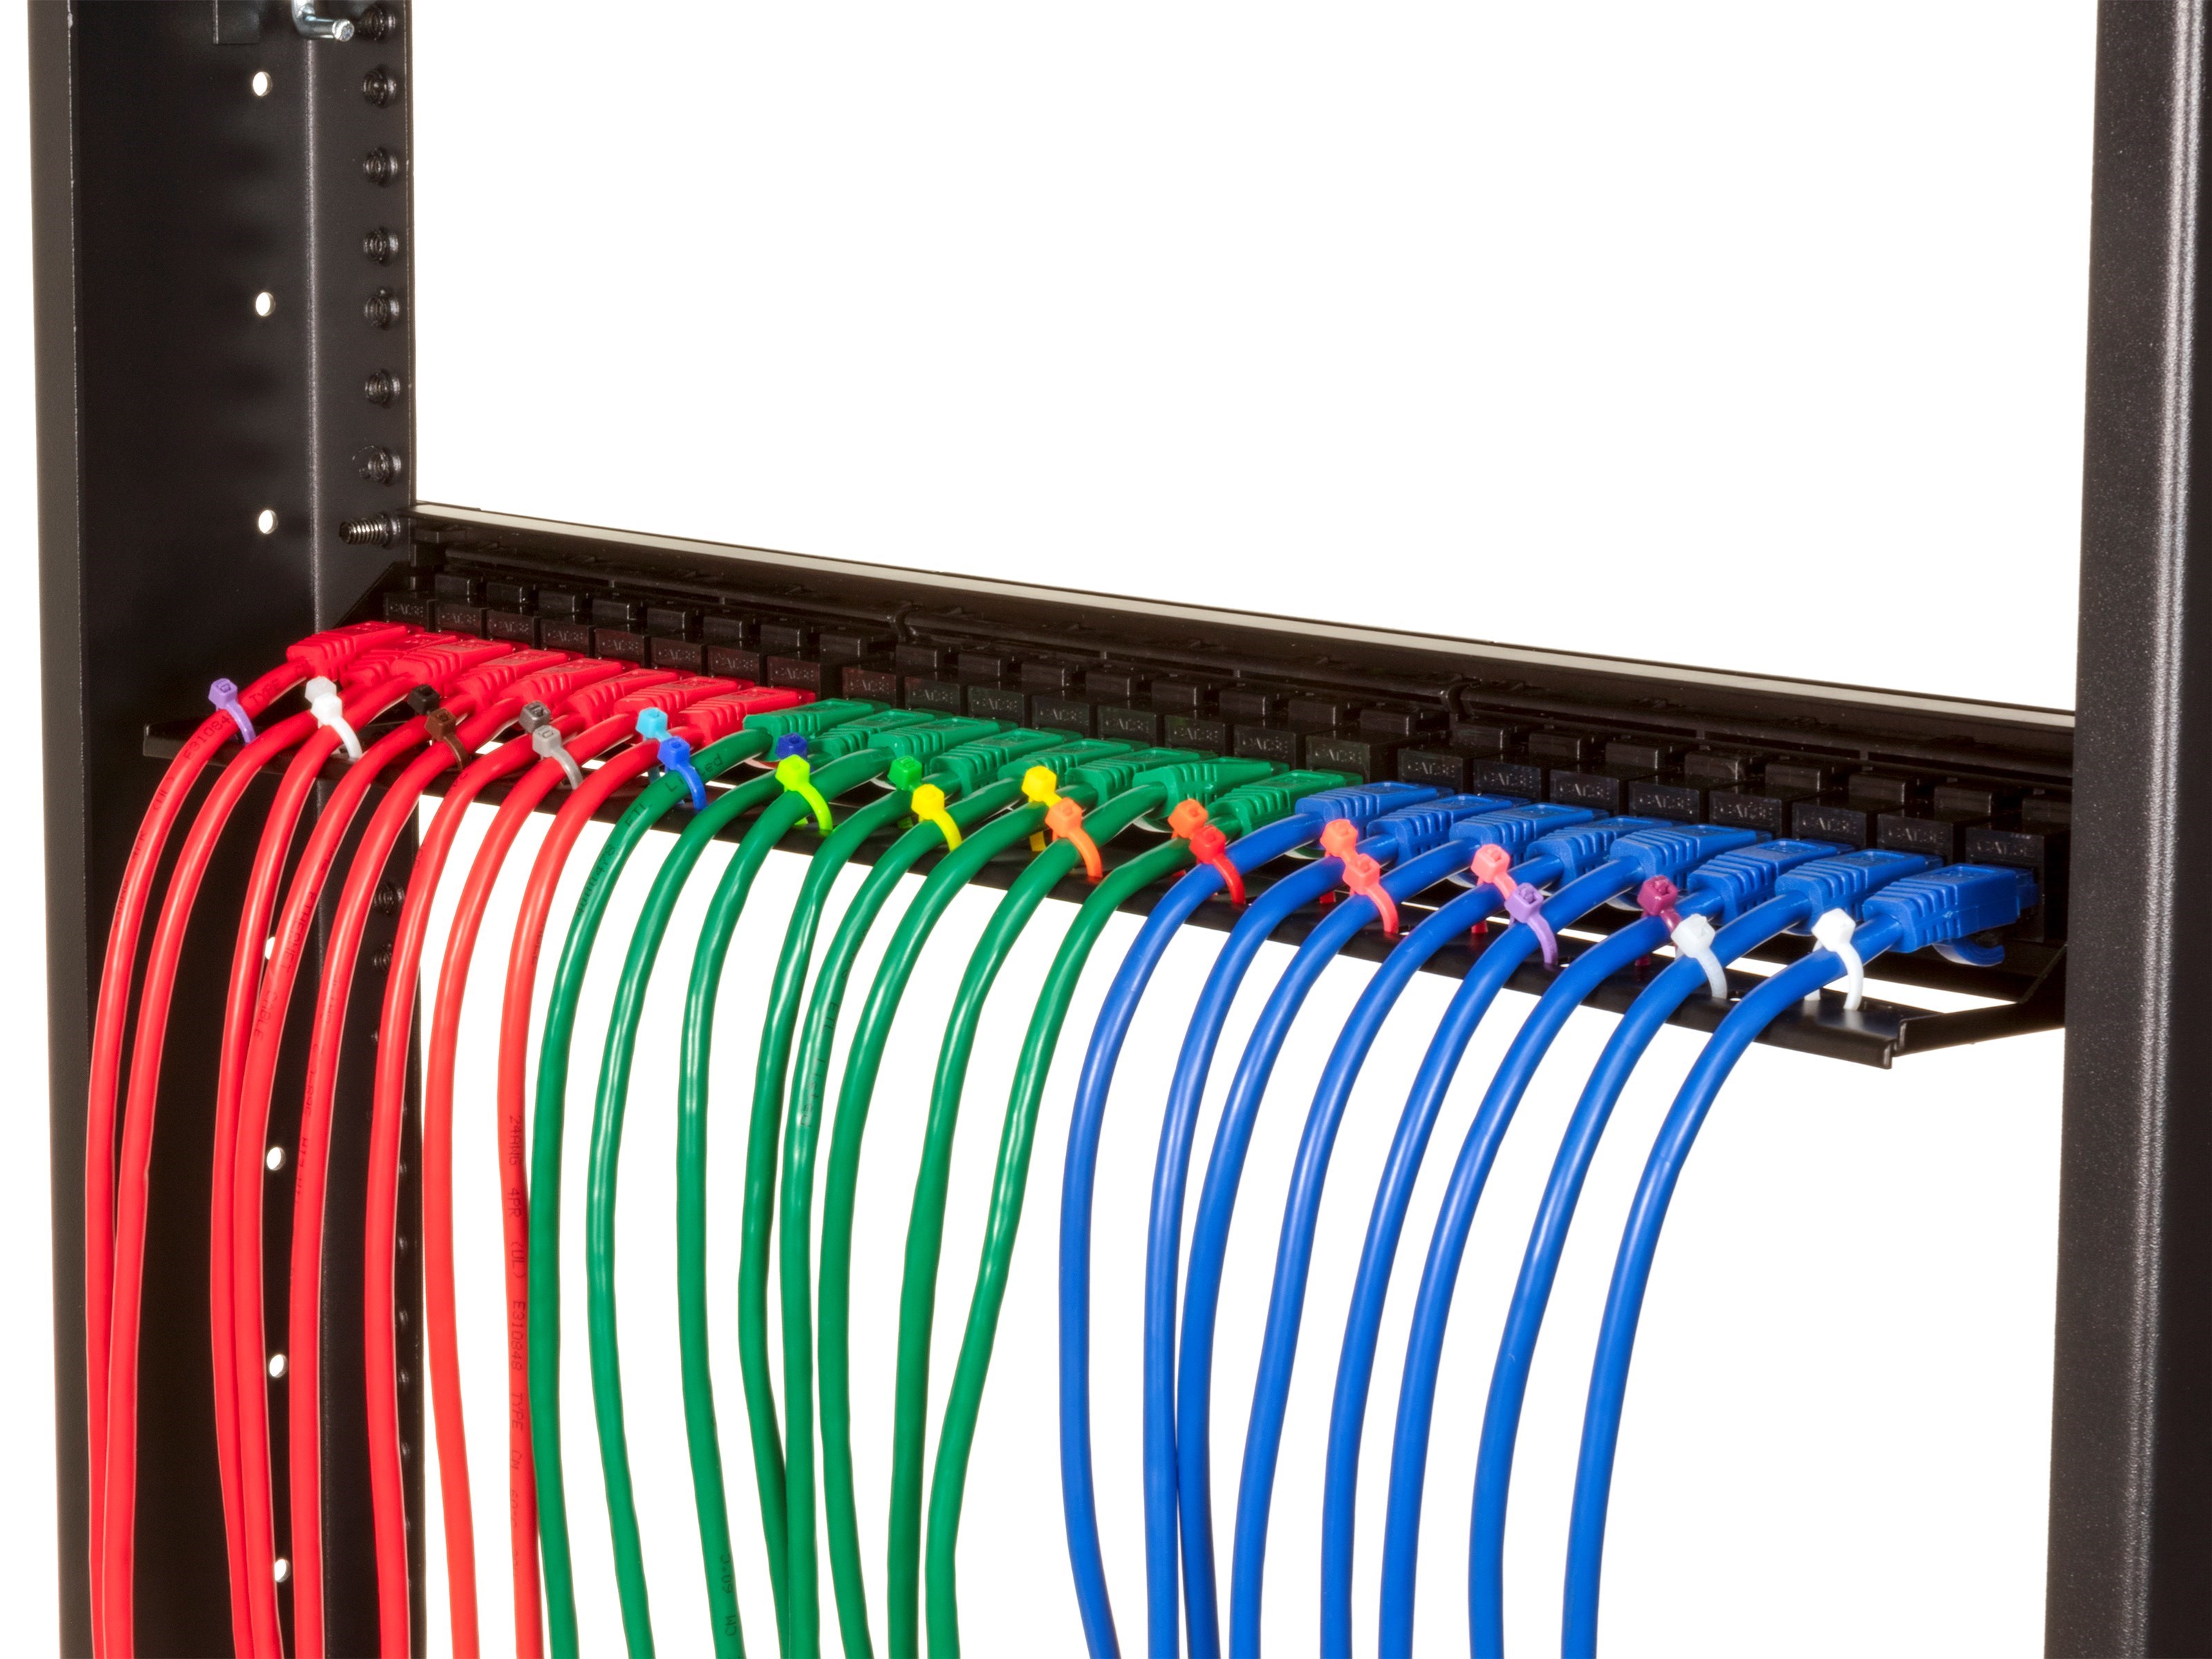 FIXMAN Nylon Cable Ties 1000 pieces 